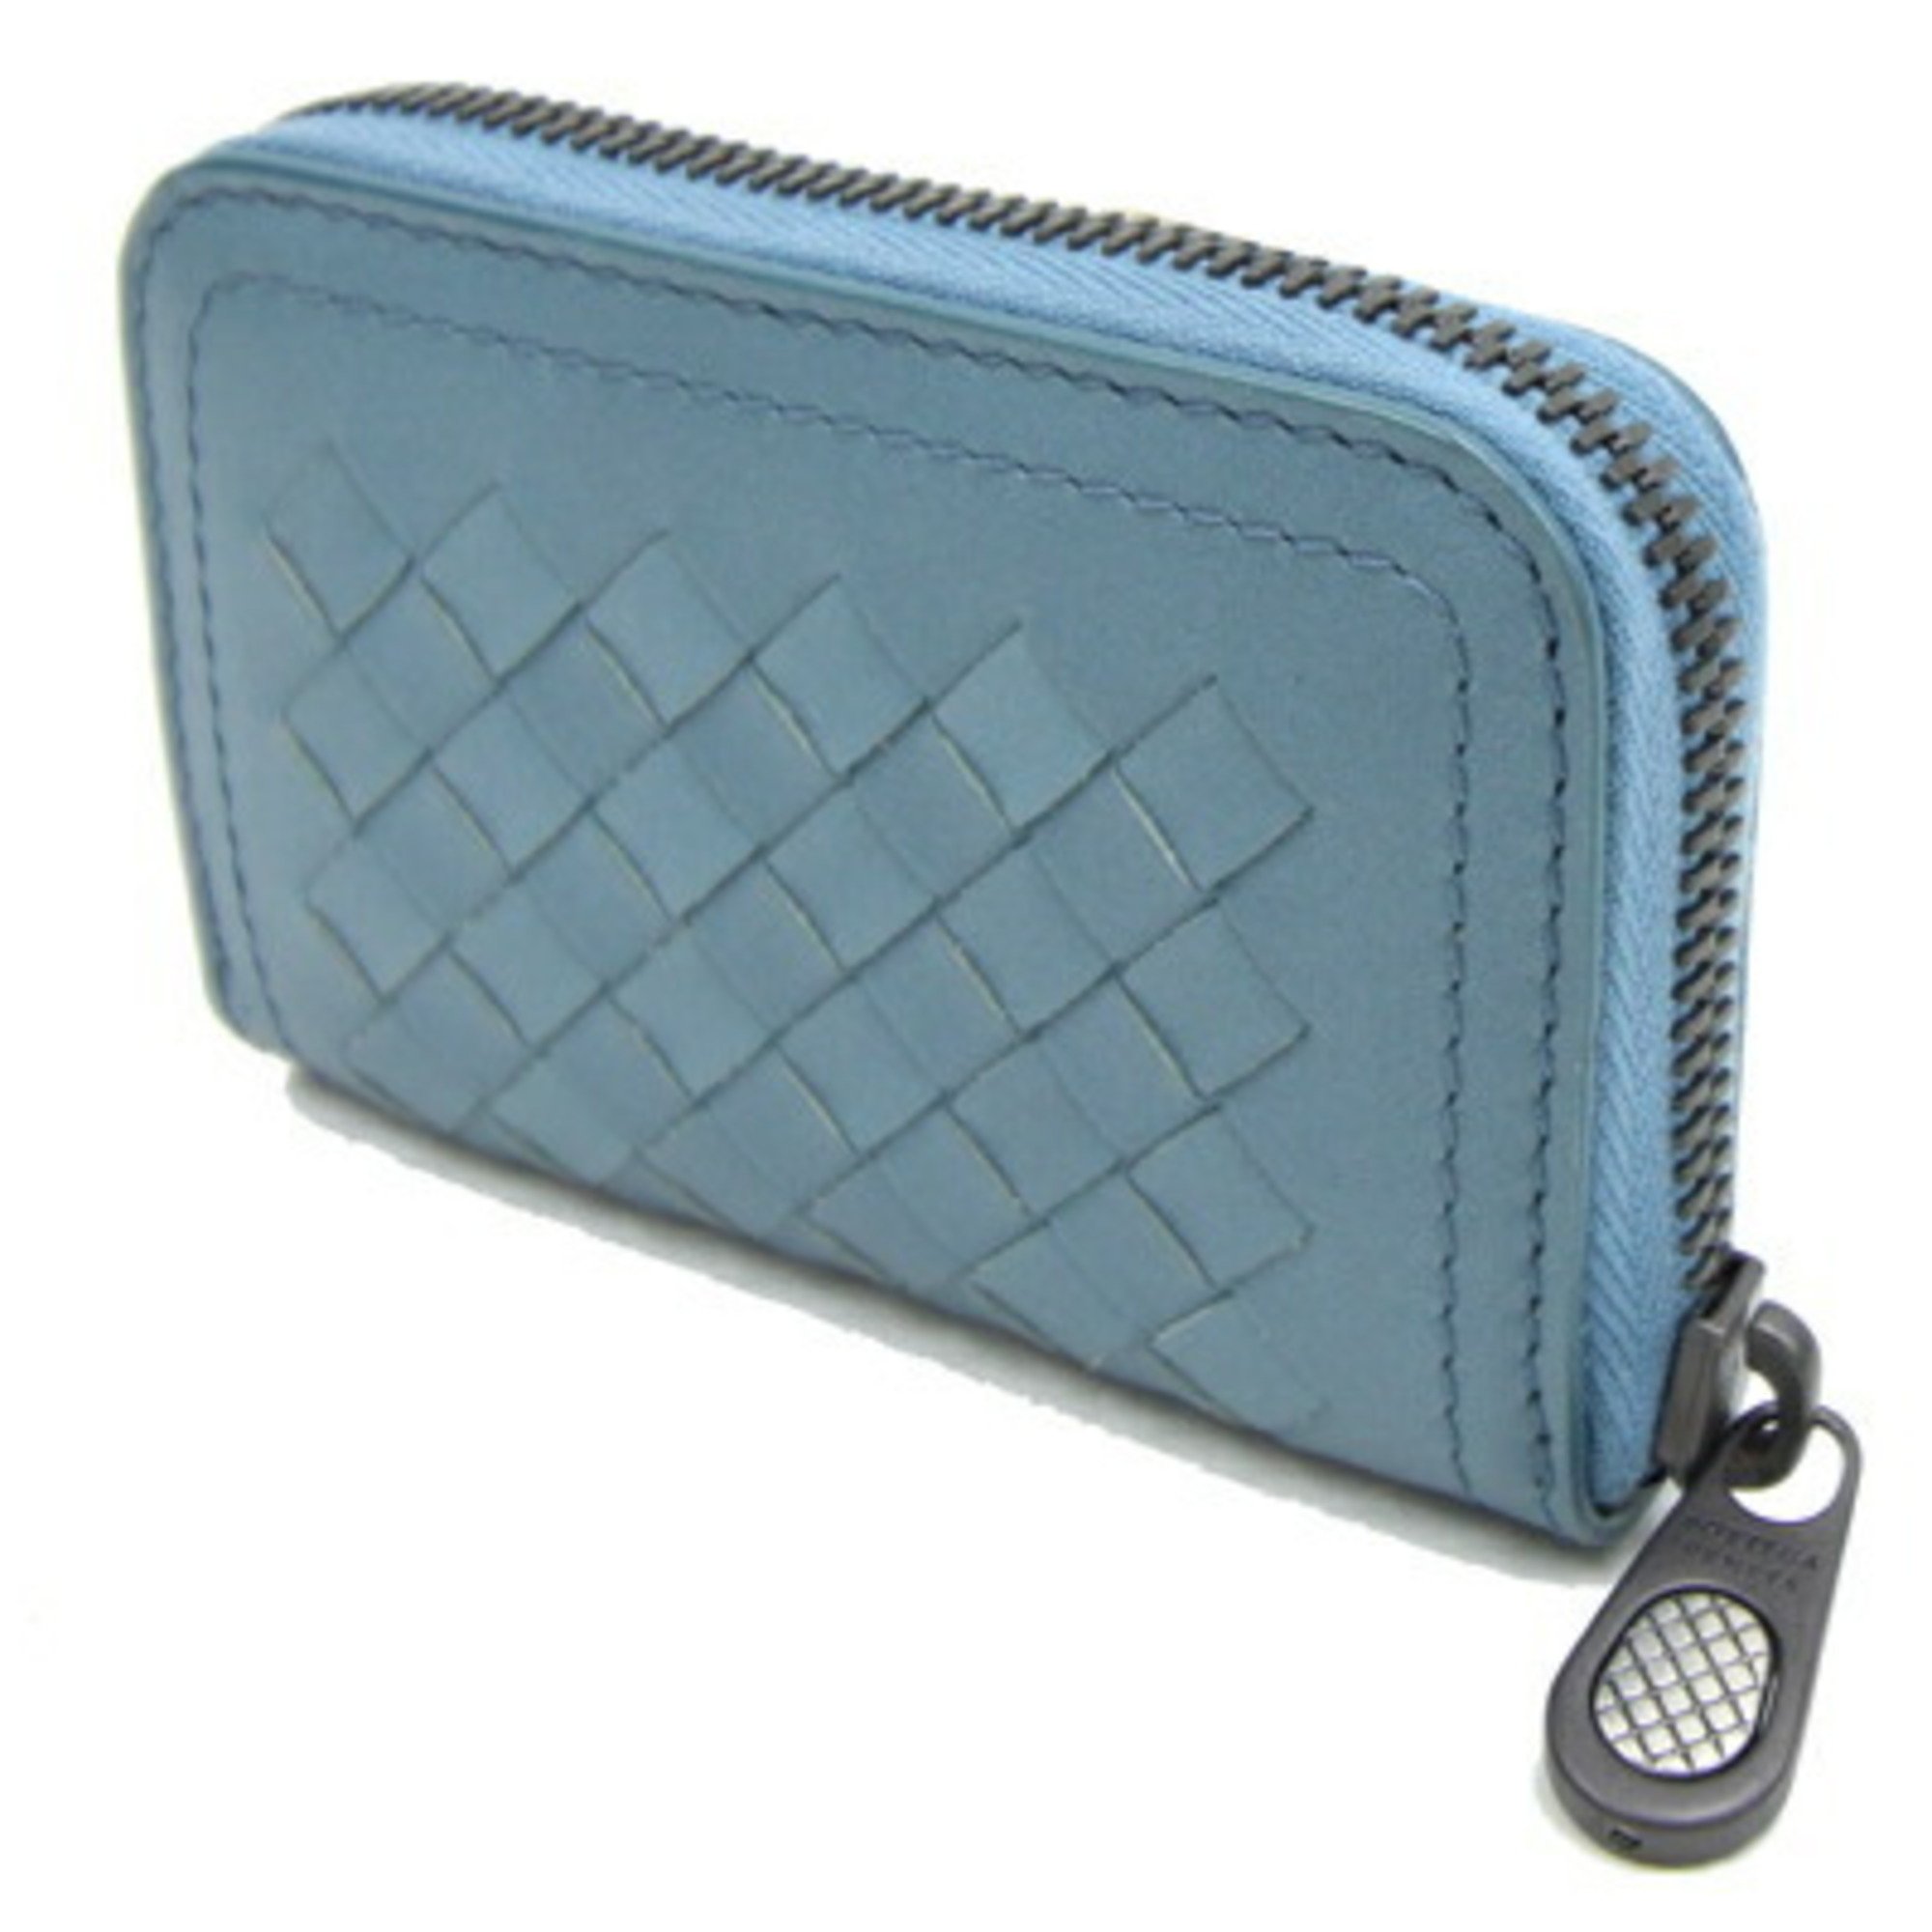 Bottega Veneta Coin Case Intrecciato 114075 Light Blue Leather Purse Compact Wallet Women Men BOTTEGA VENETA